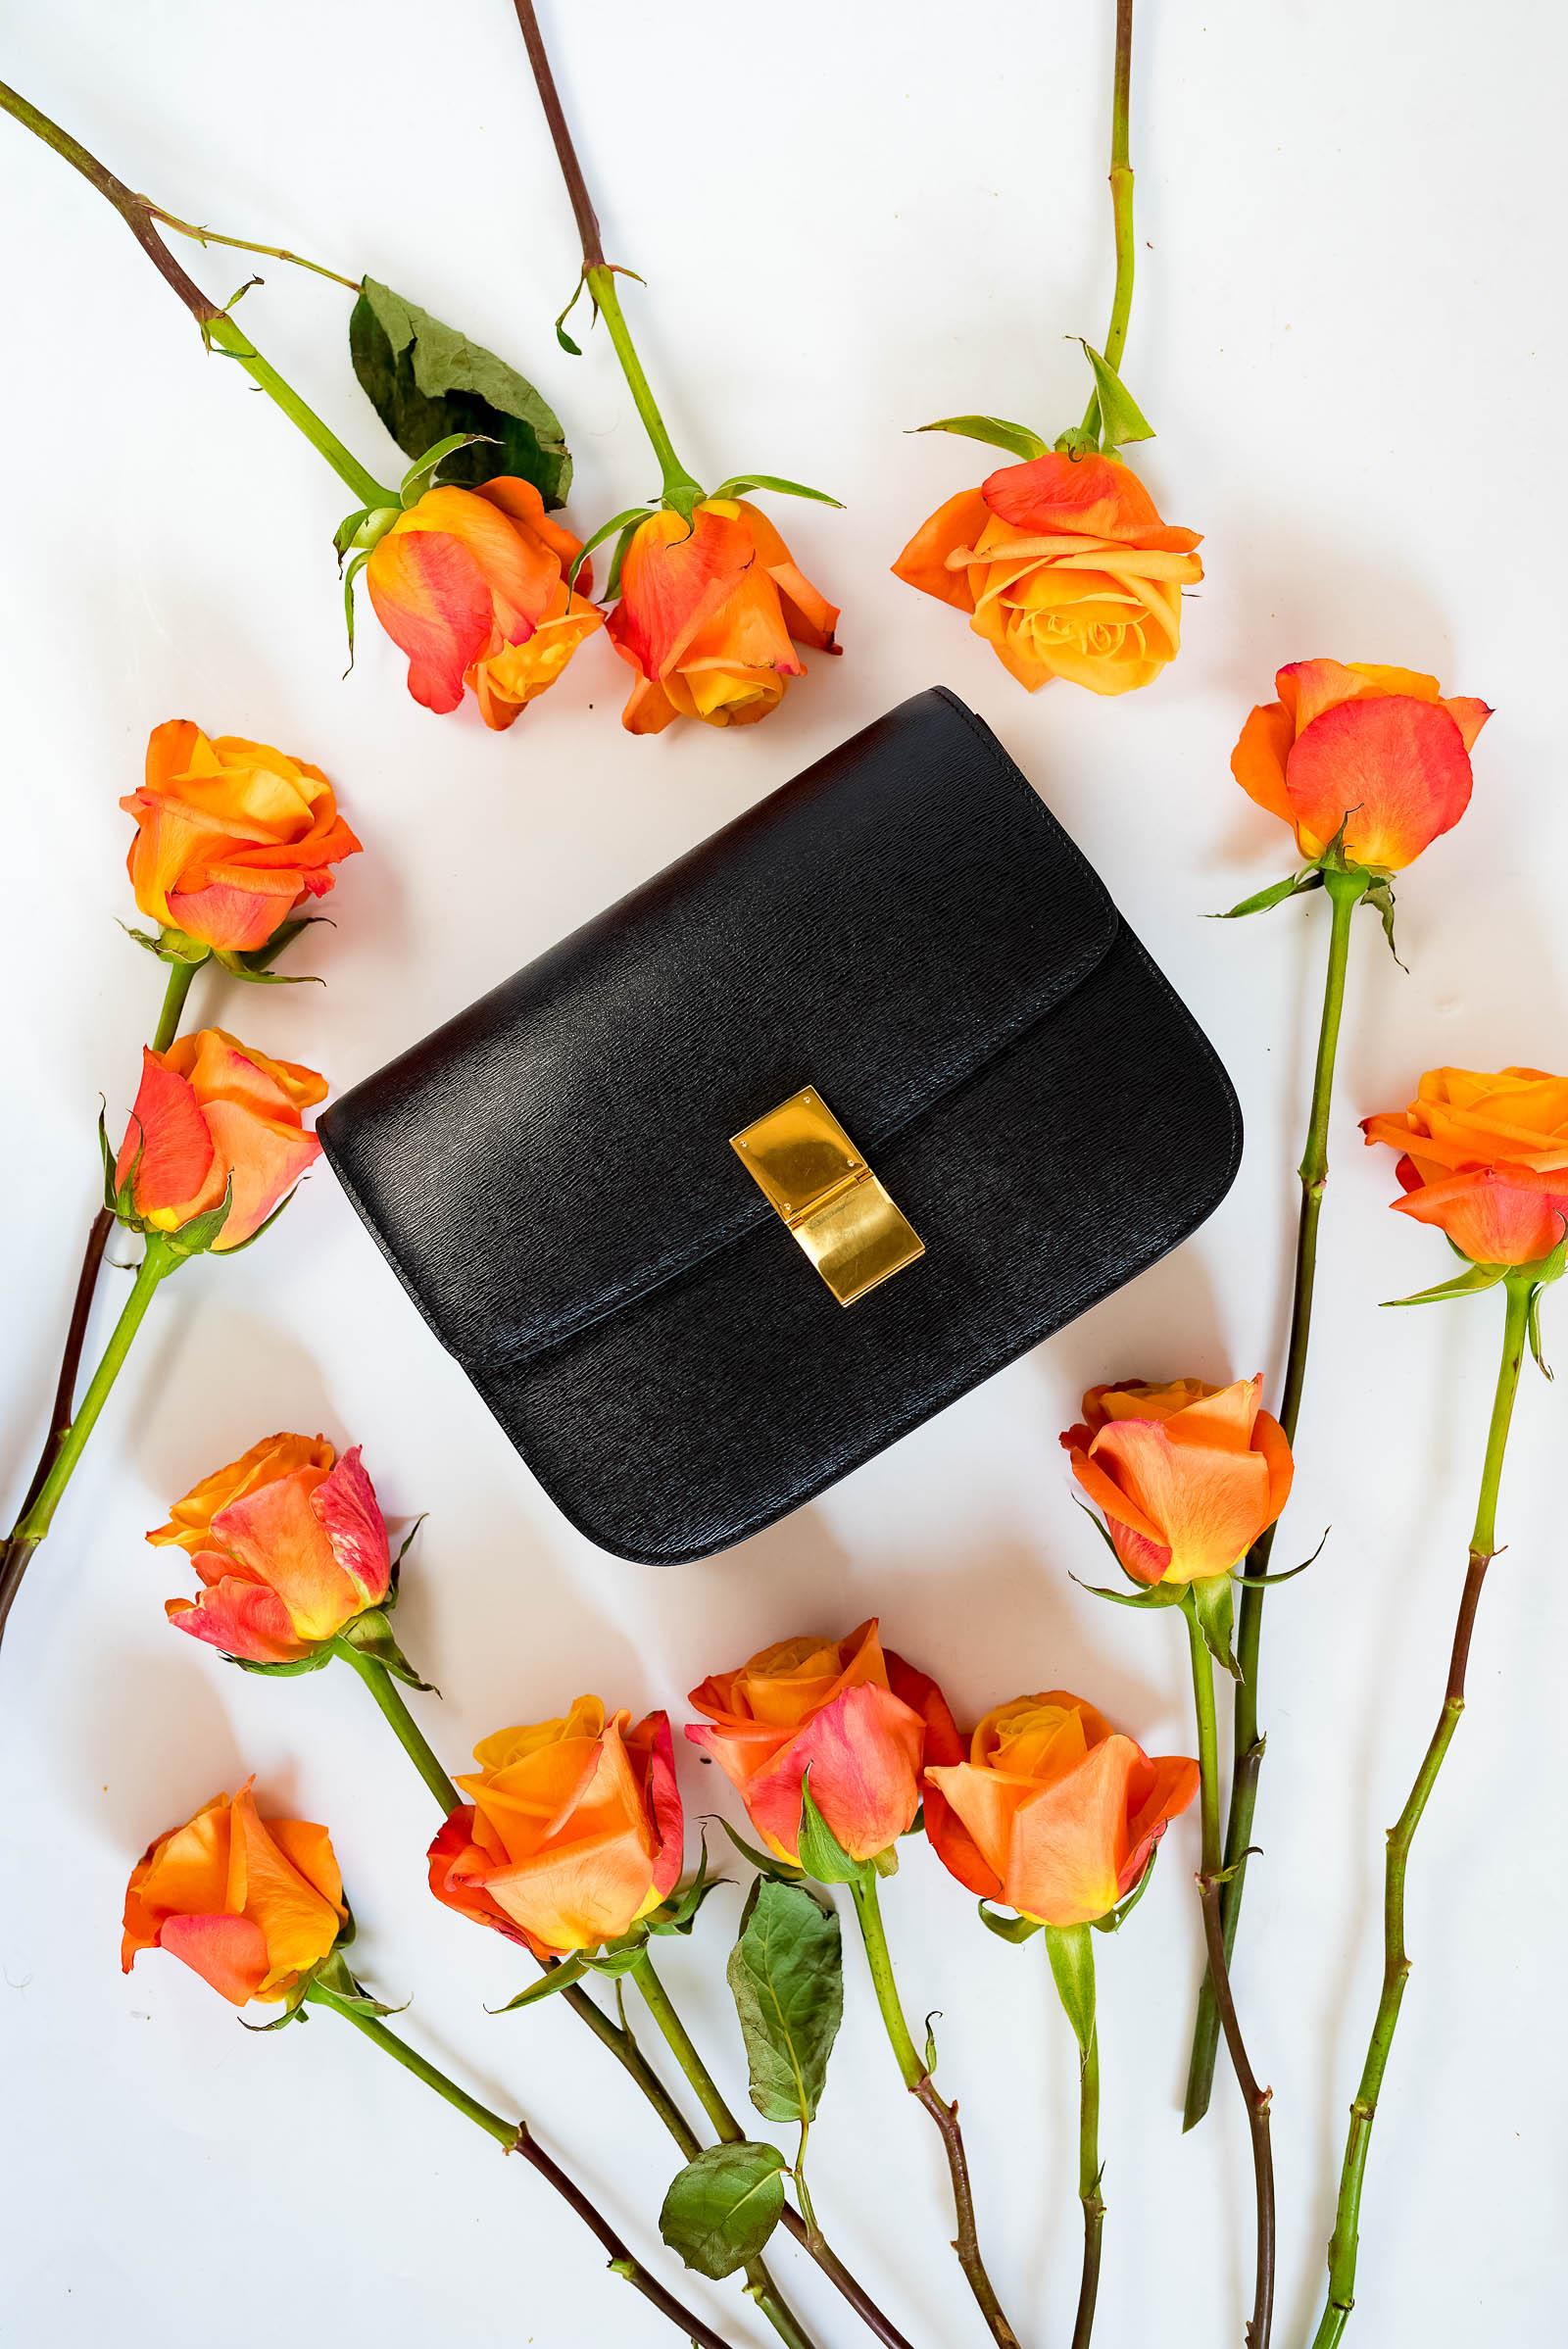 Céline Box Bag Review, 2015 Medium Black